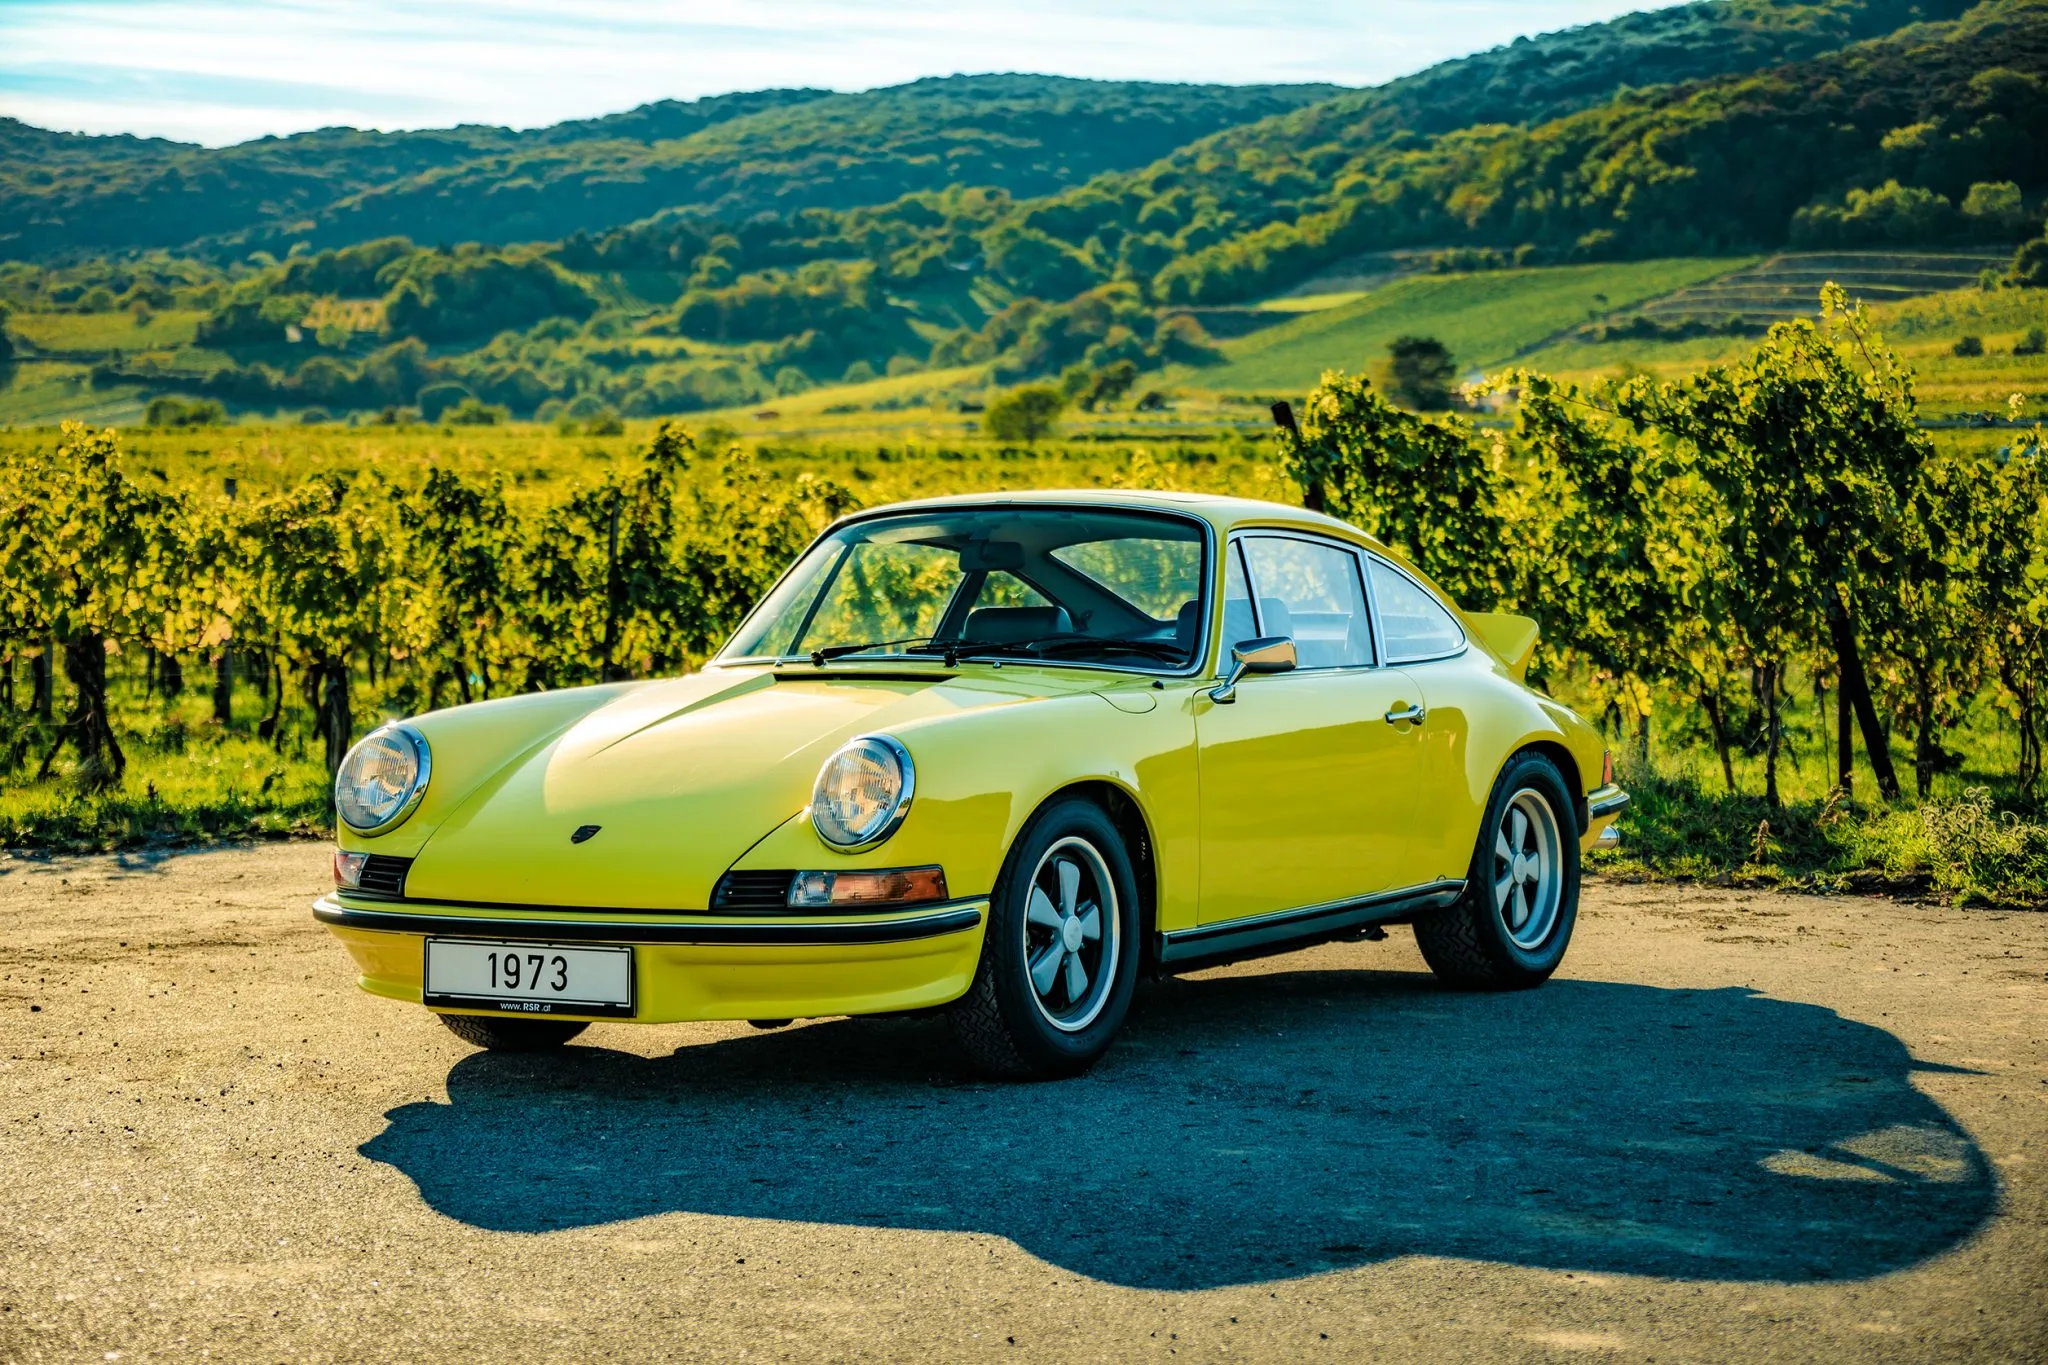 FOR SALE: Stunning 1973 Porsche 911 Carrera  RS Touring - Stuttcars